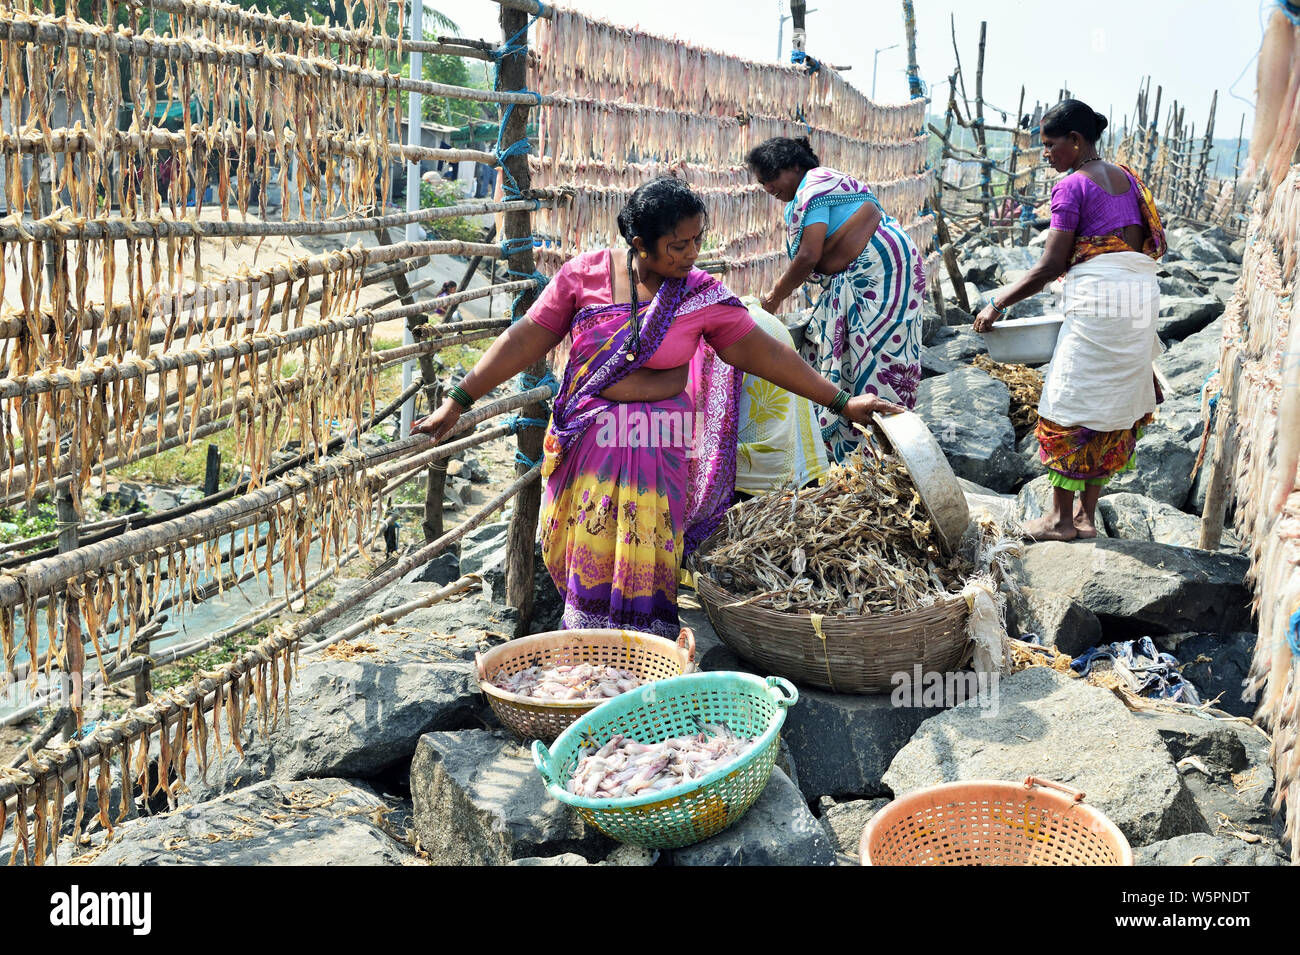 Fischer Frauen trocknen Fisch Maroli Valsad Gujarat Indien Asien Stockfoto